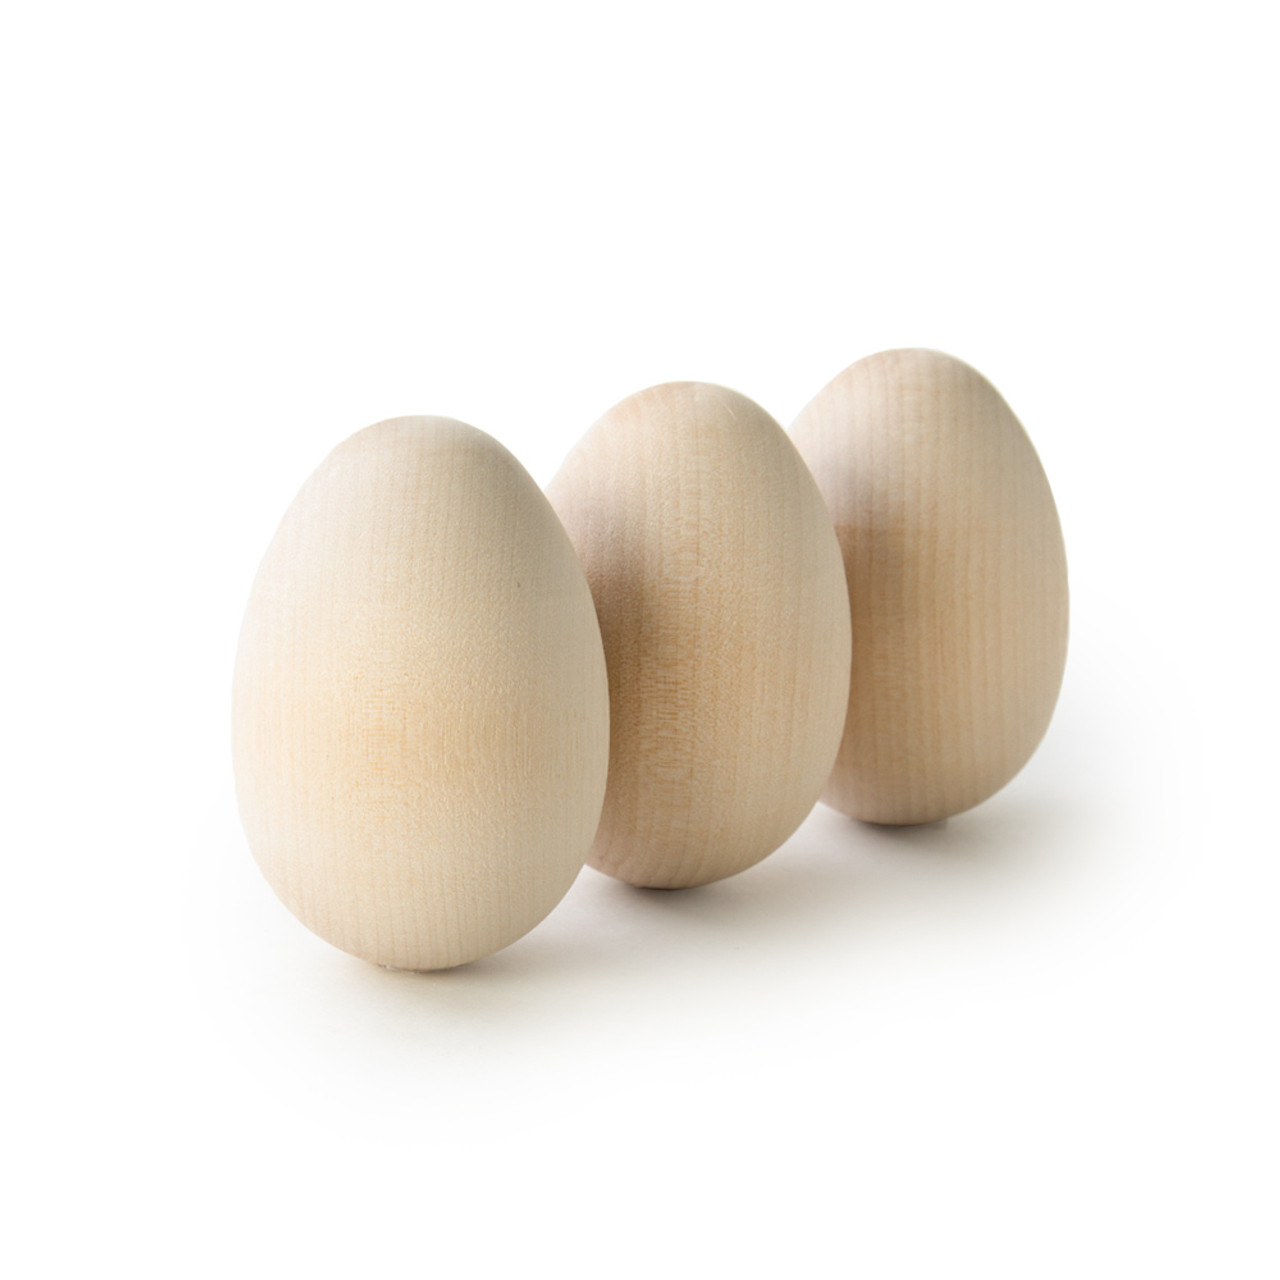 1/2 Dozen Wooden Eggs